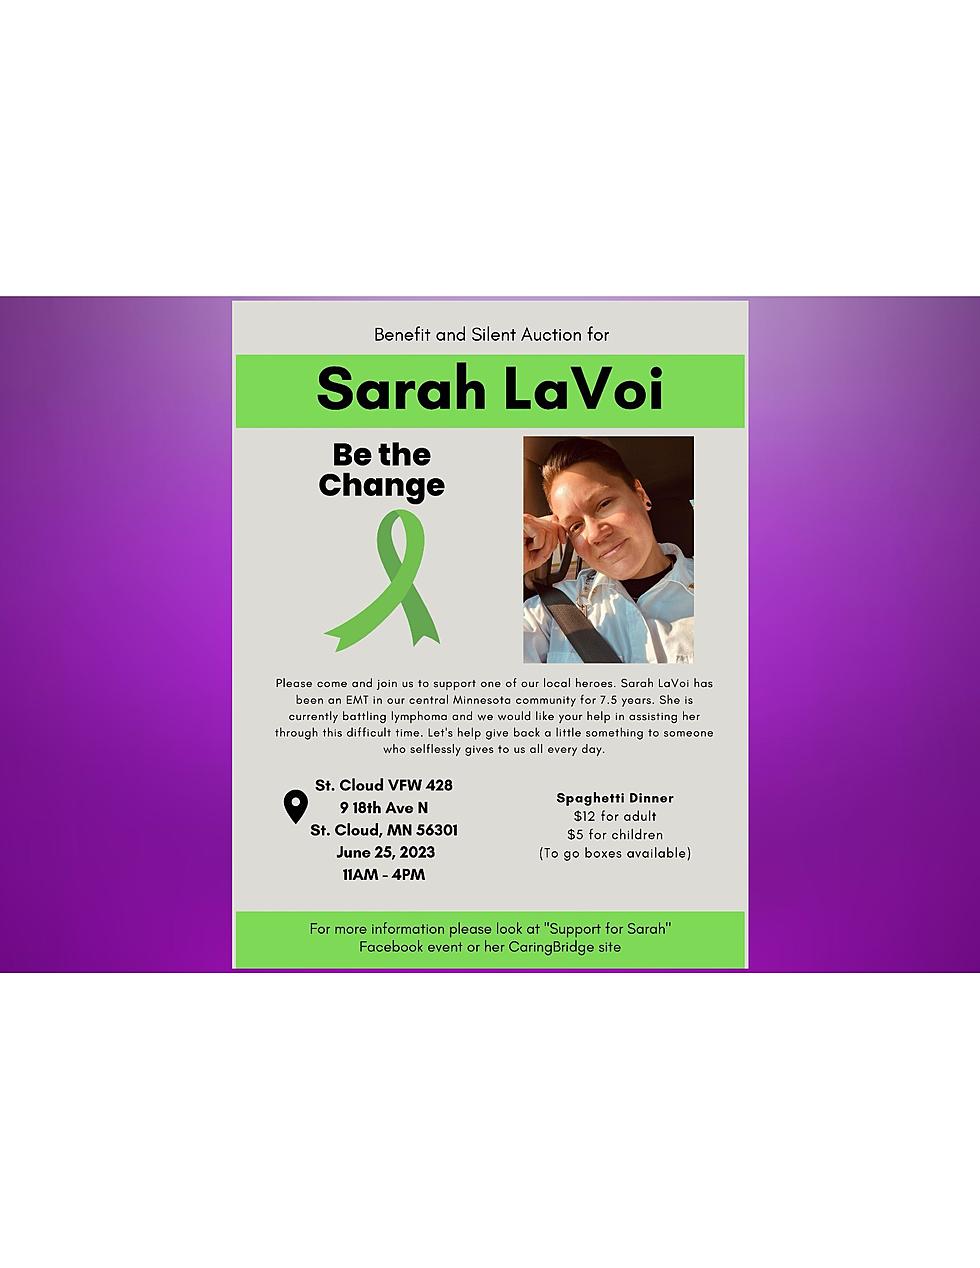 Sarah LaVoi Benefit and Silent Auction